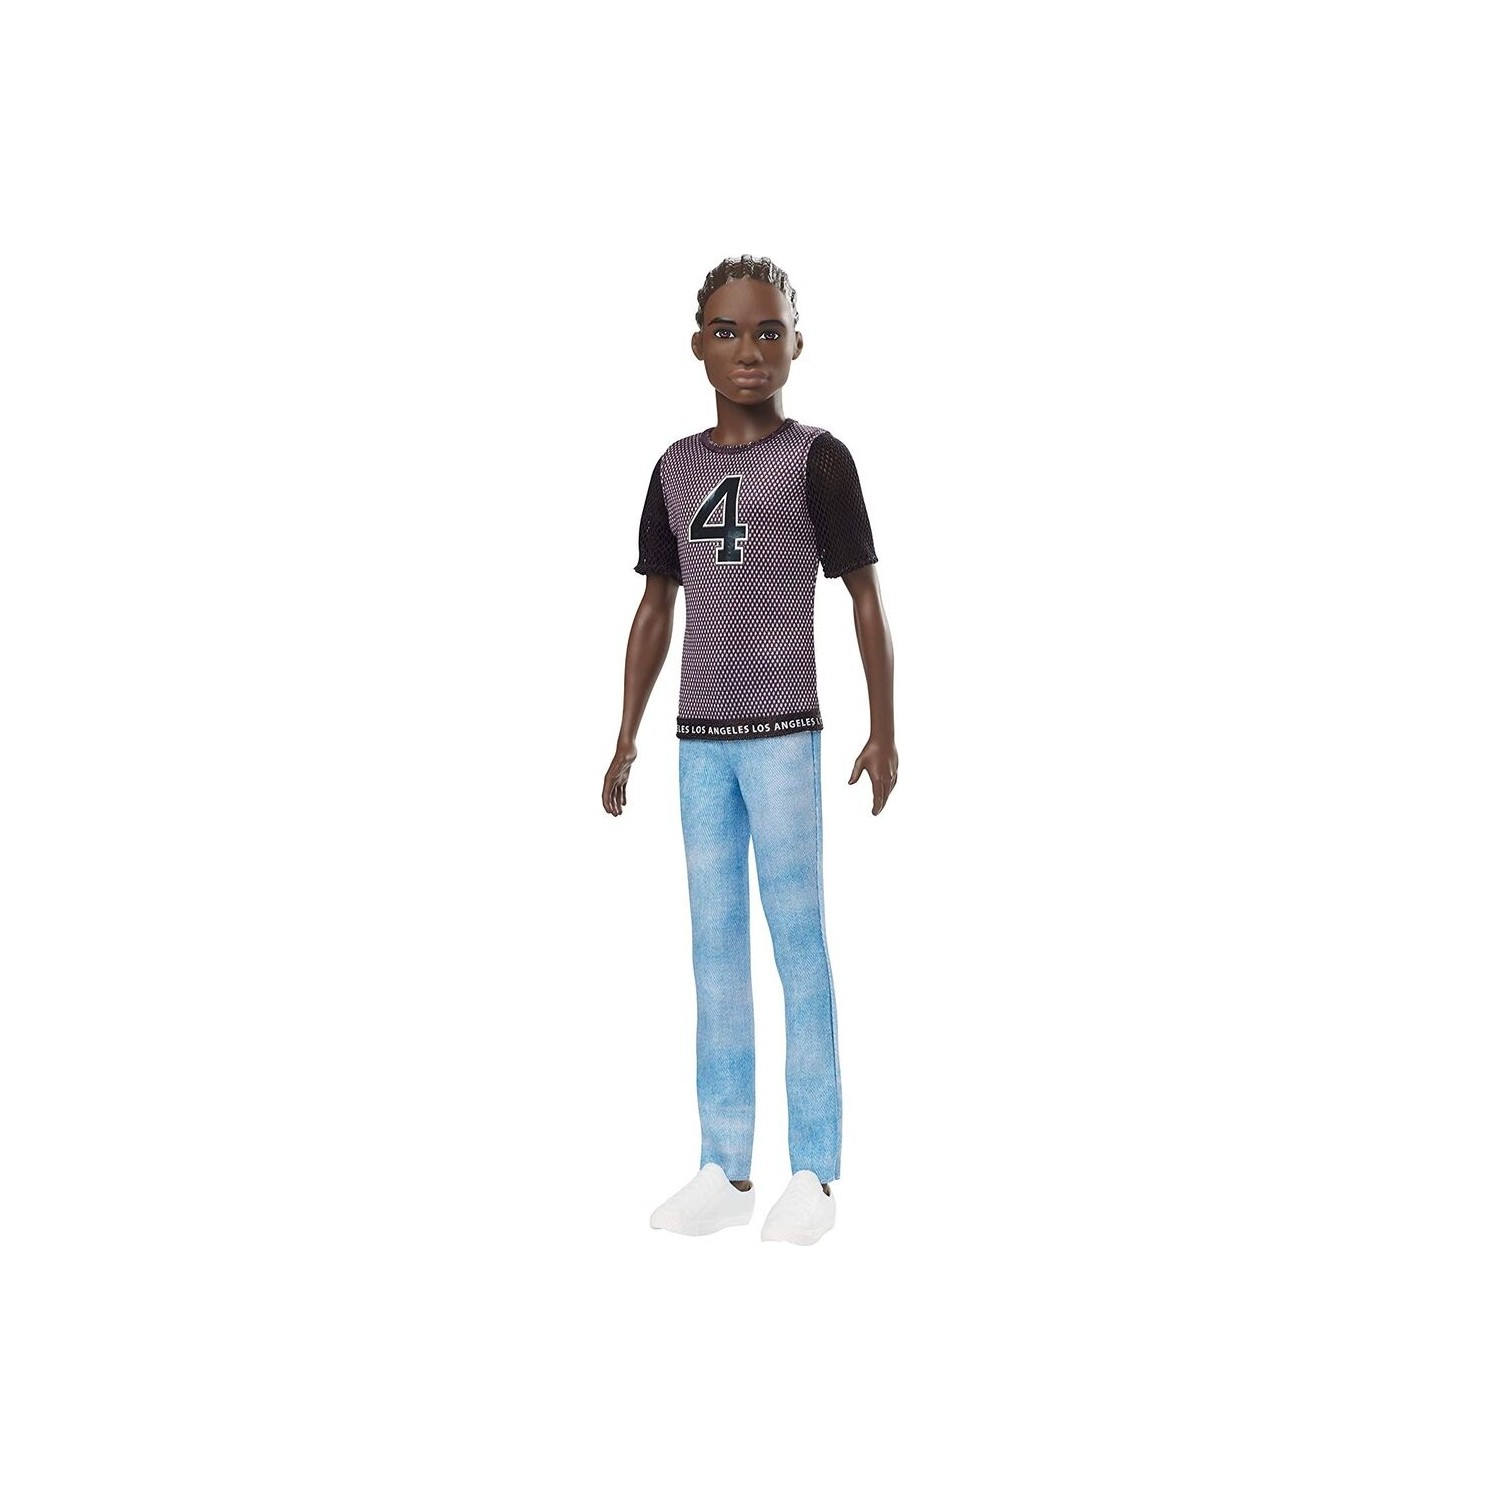 Кукла Barbie Кен DWK44-GDV13 barbie комплект одежды для кена cfy02 dwg76 синий коричневый